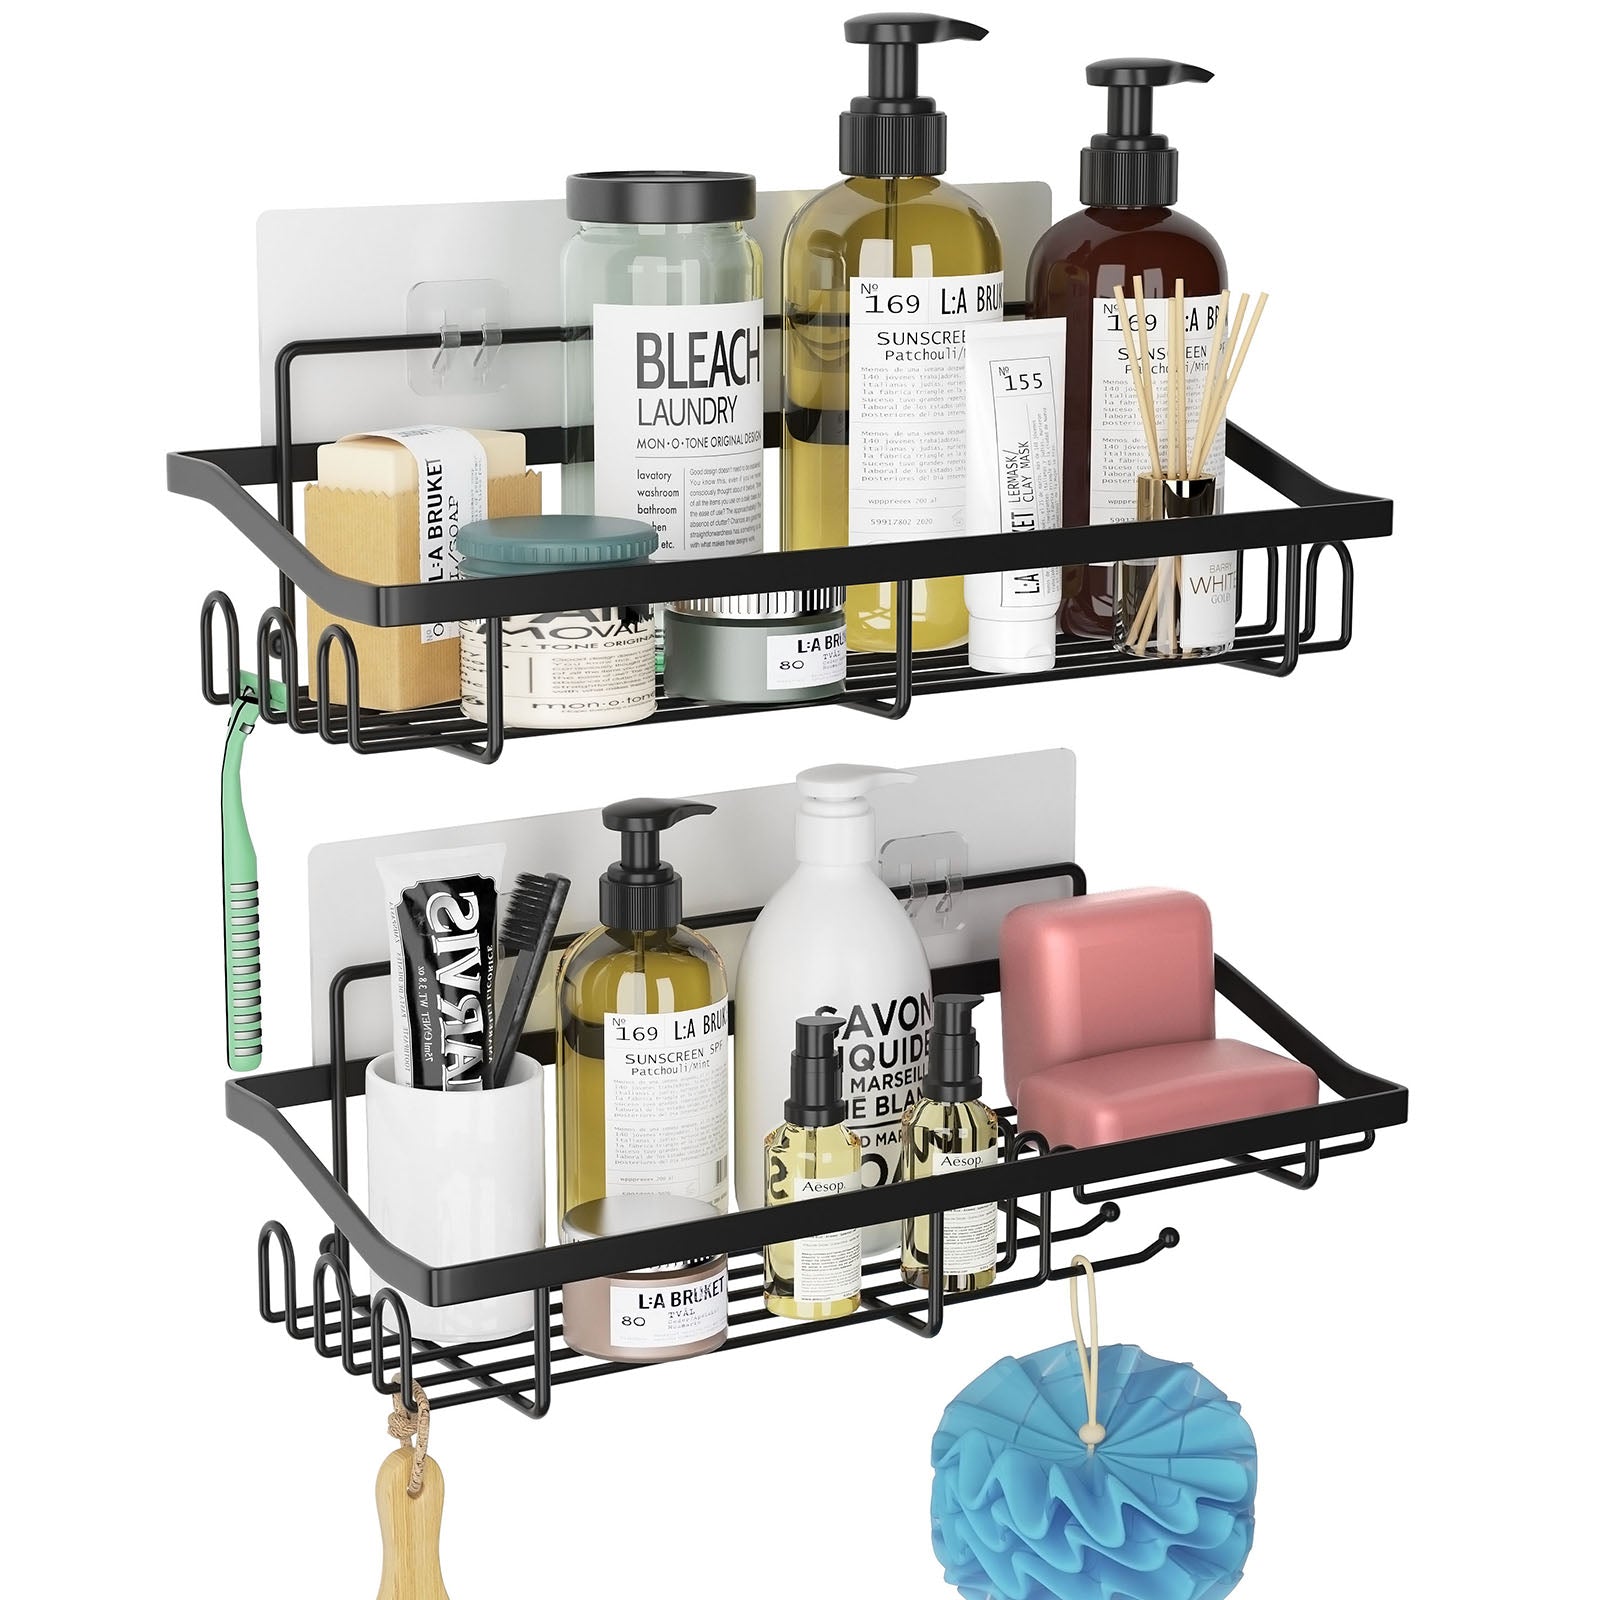 KINCMAX Shower Caddy Set 2 Pack Shampoo Holder Organizer Adhesive Bathroom Shelf Stainless Steel Black, Size: One Size